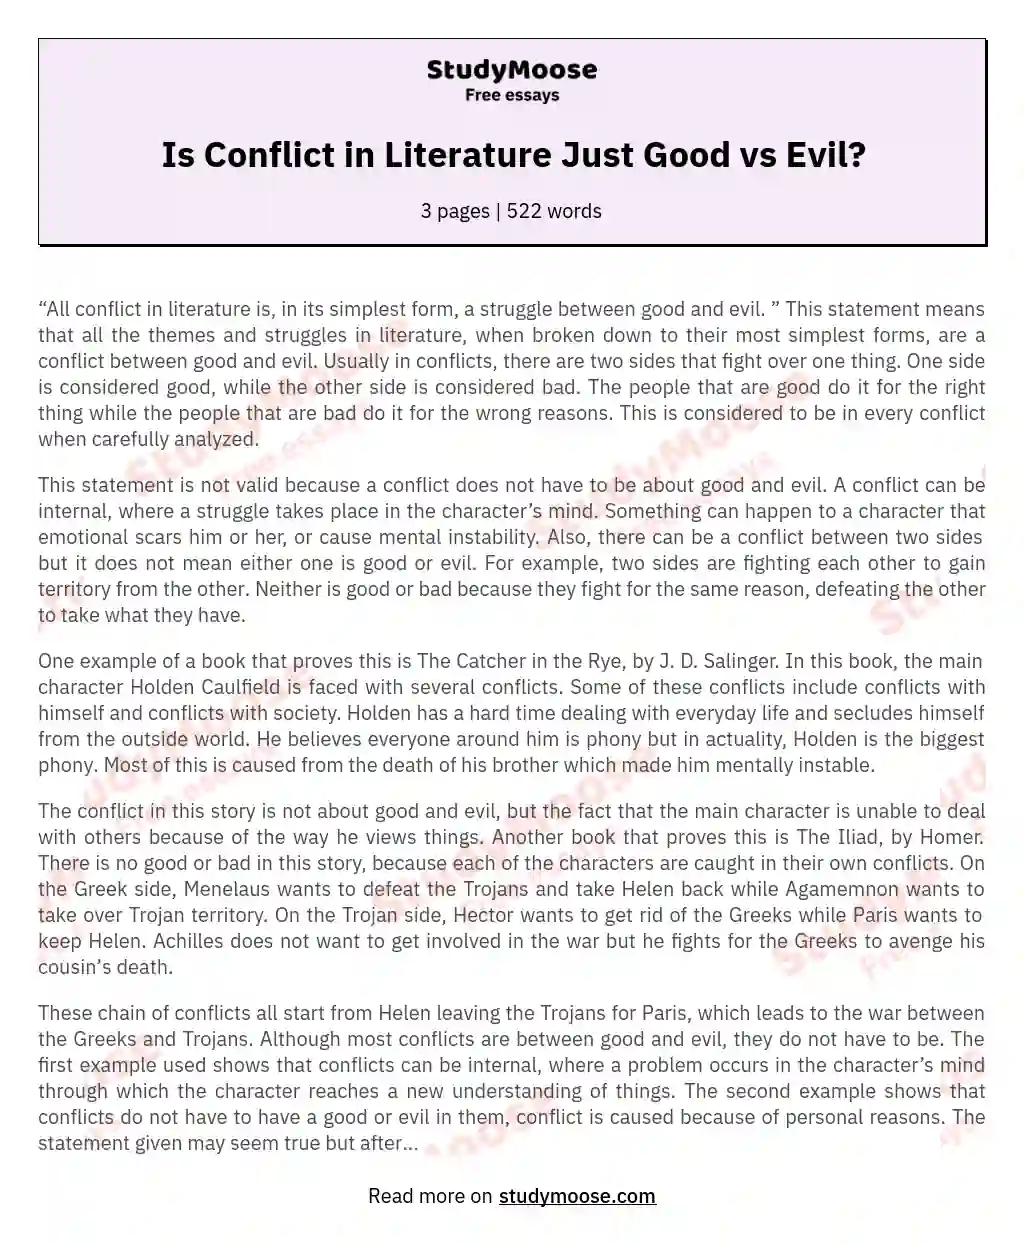 Is Conflict in Literature Just Good vs Evil? essay